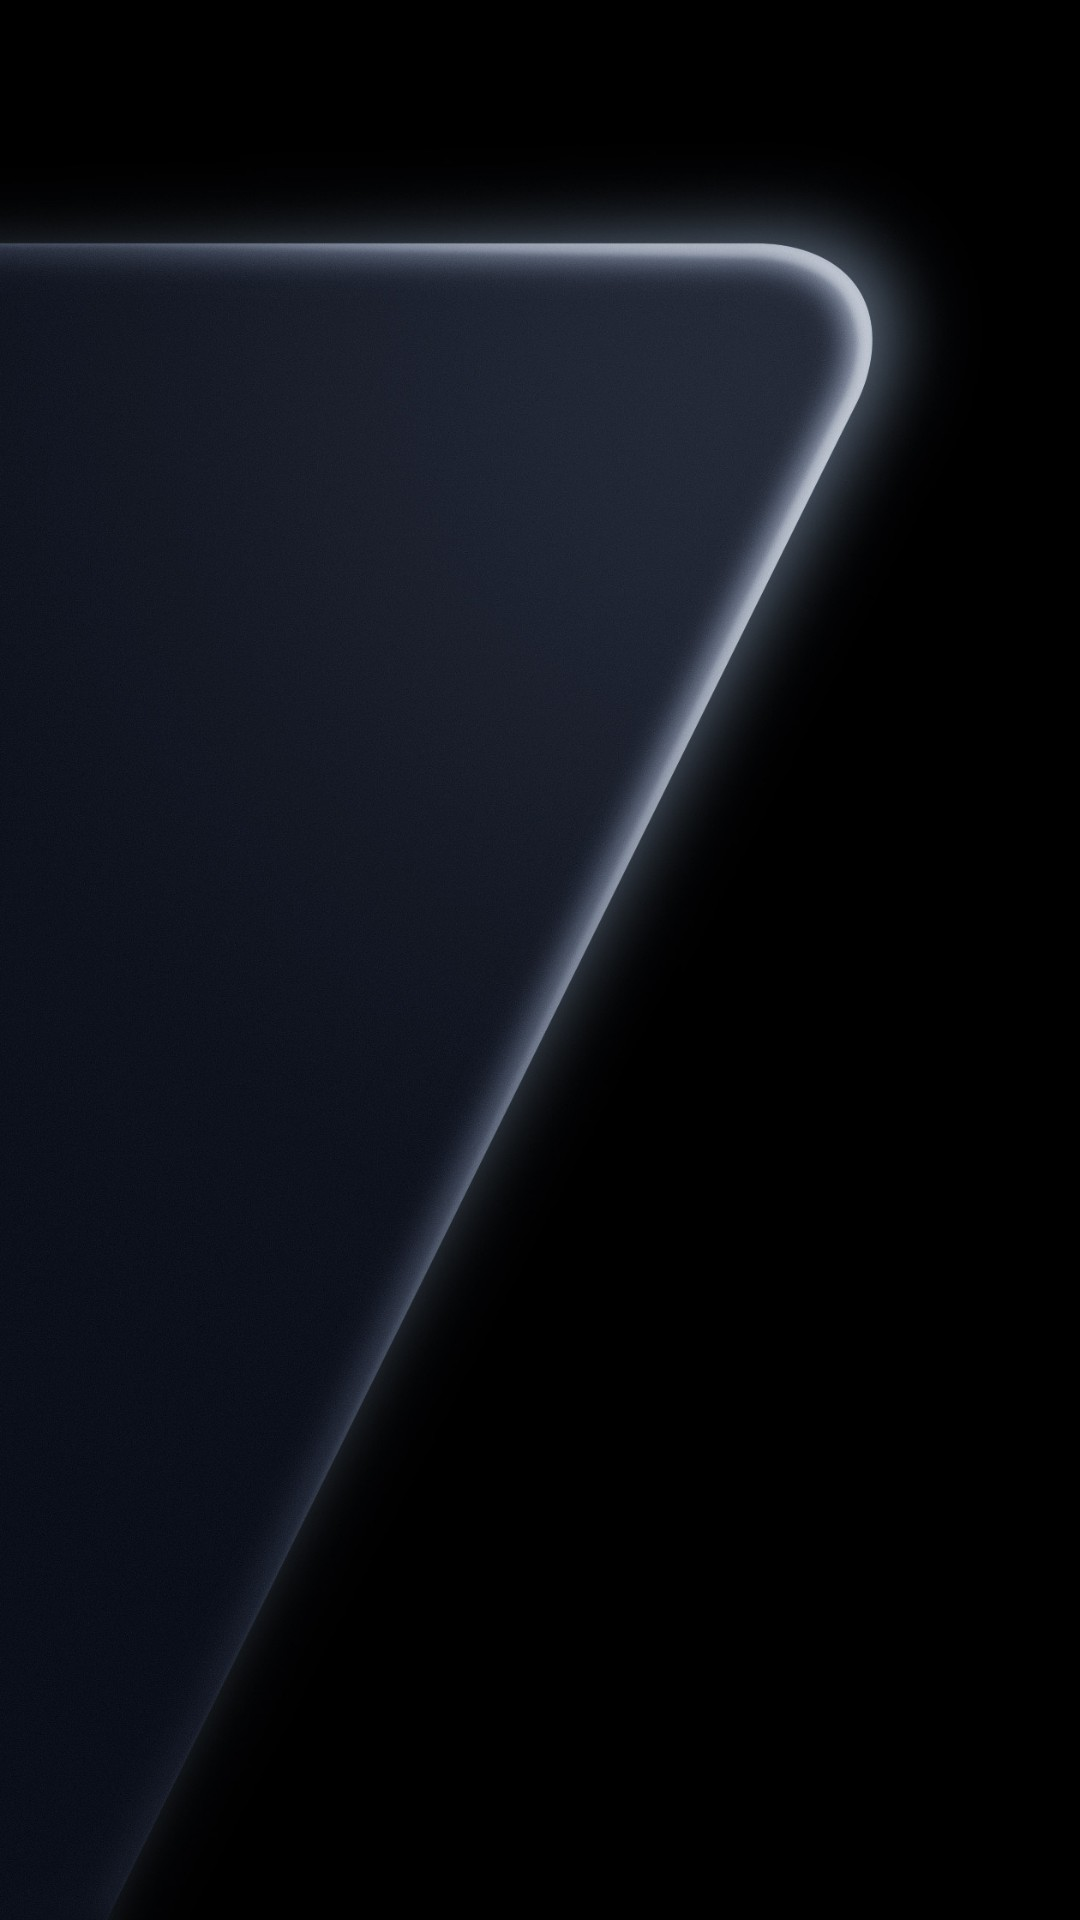 Samsung galaxy s7 edge default wallpaper – Sfondo moderno